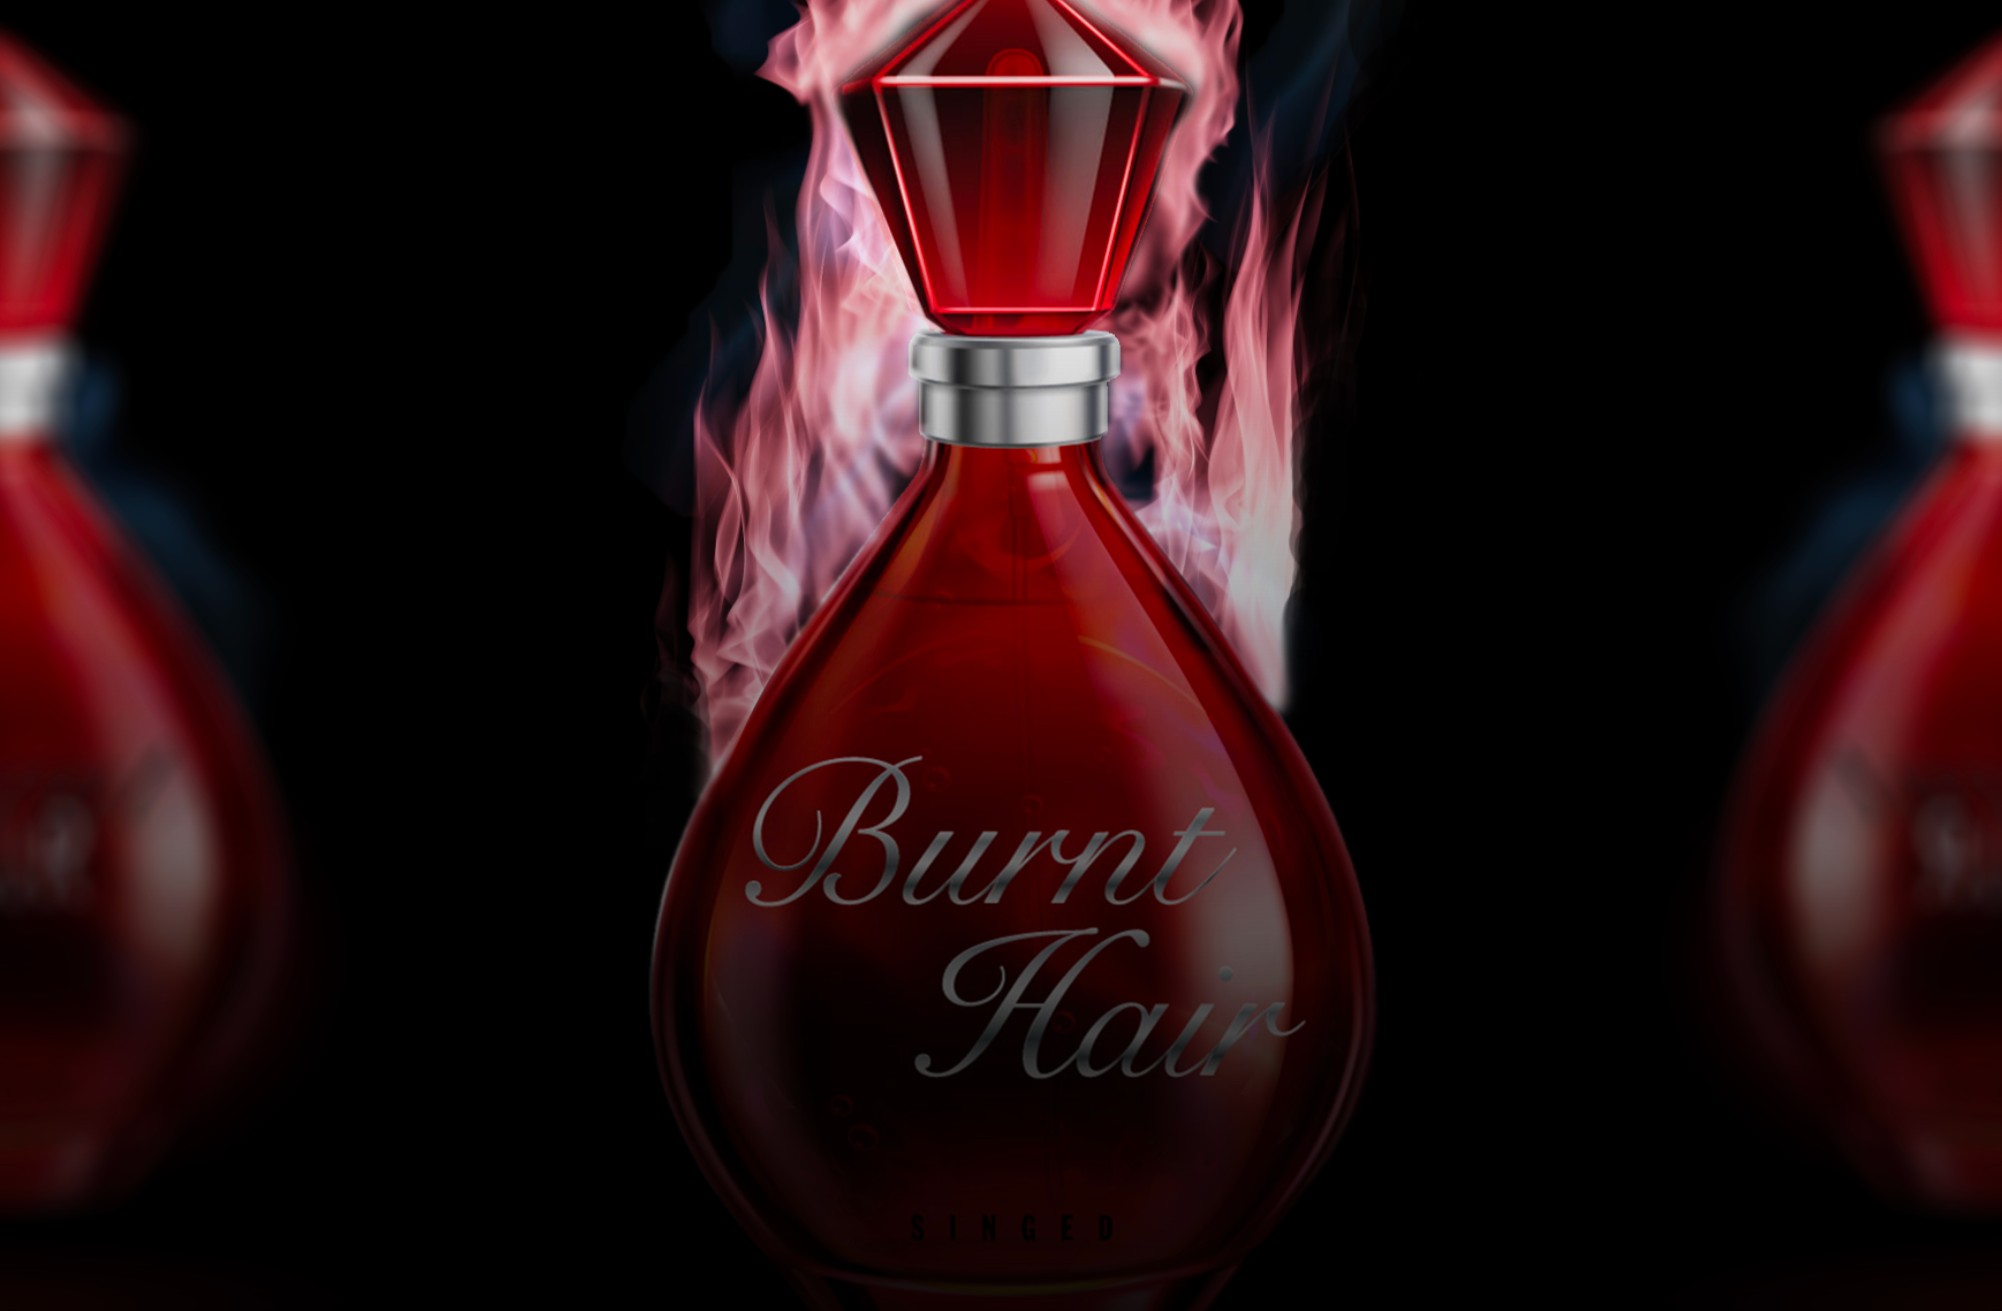 The Boring Company Burnt Perfume scalper’s price